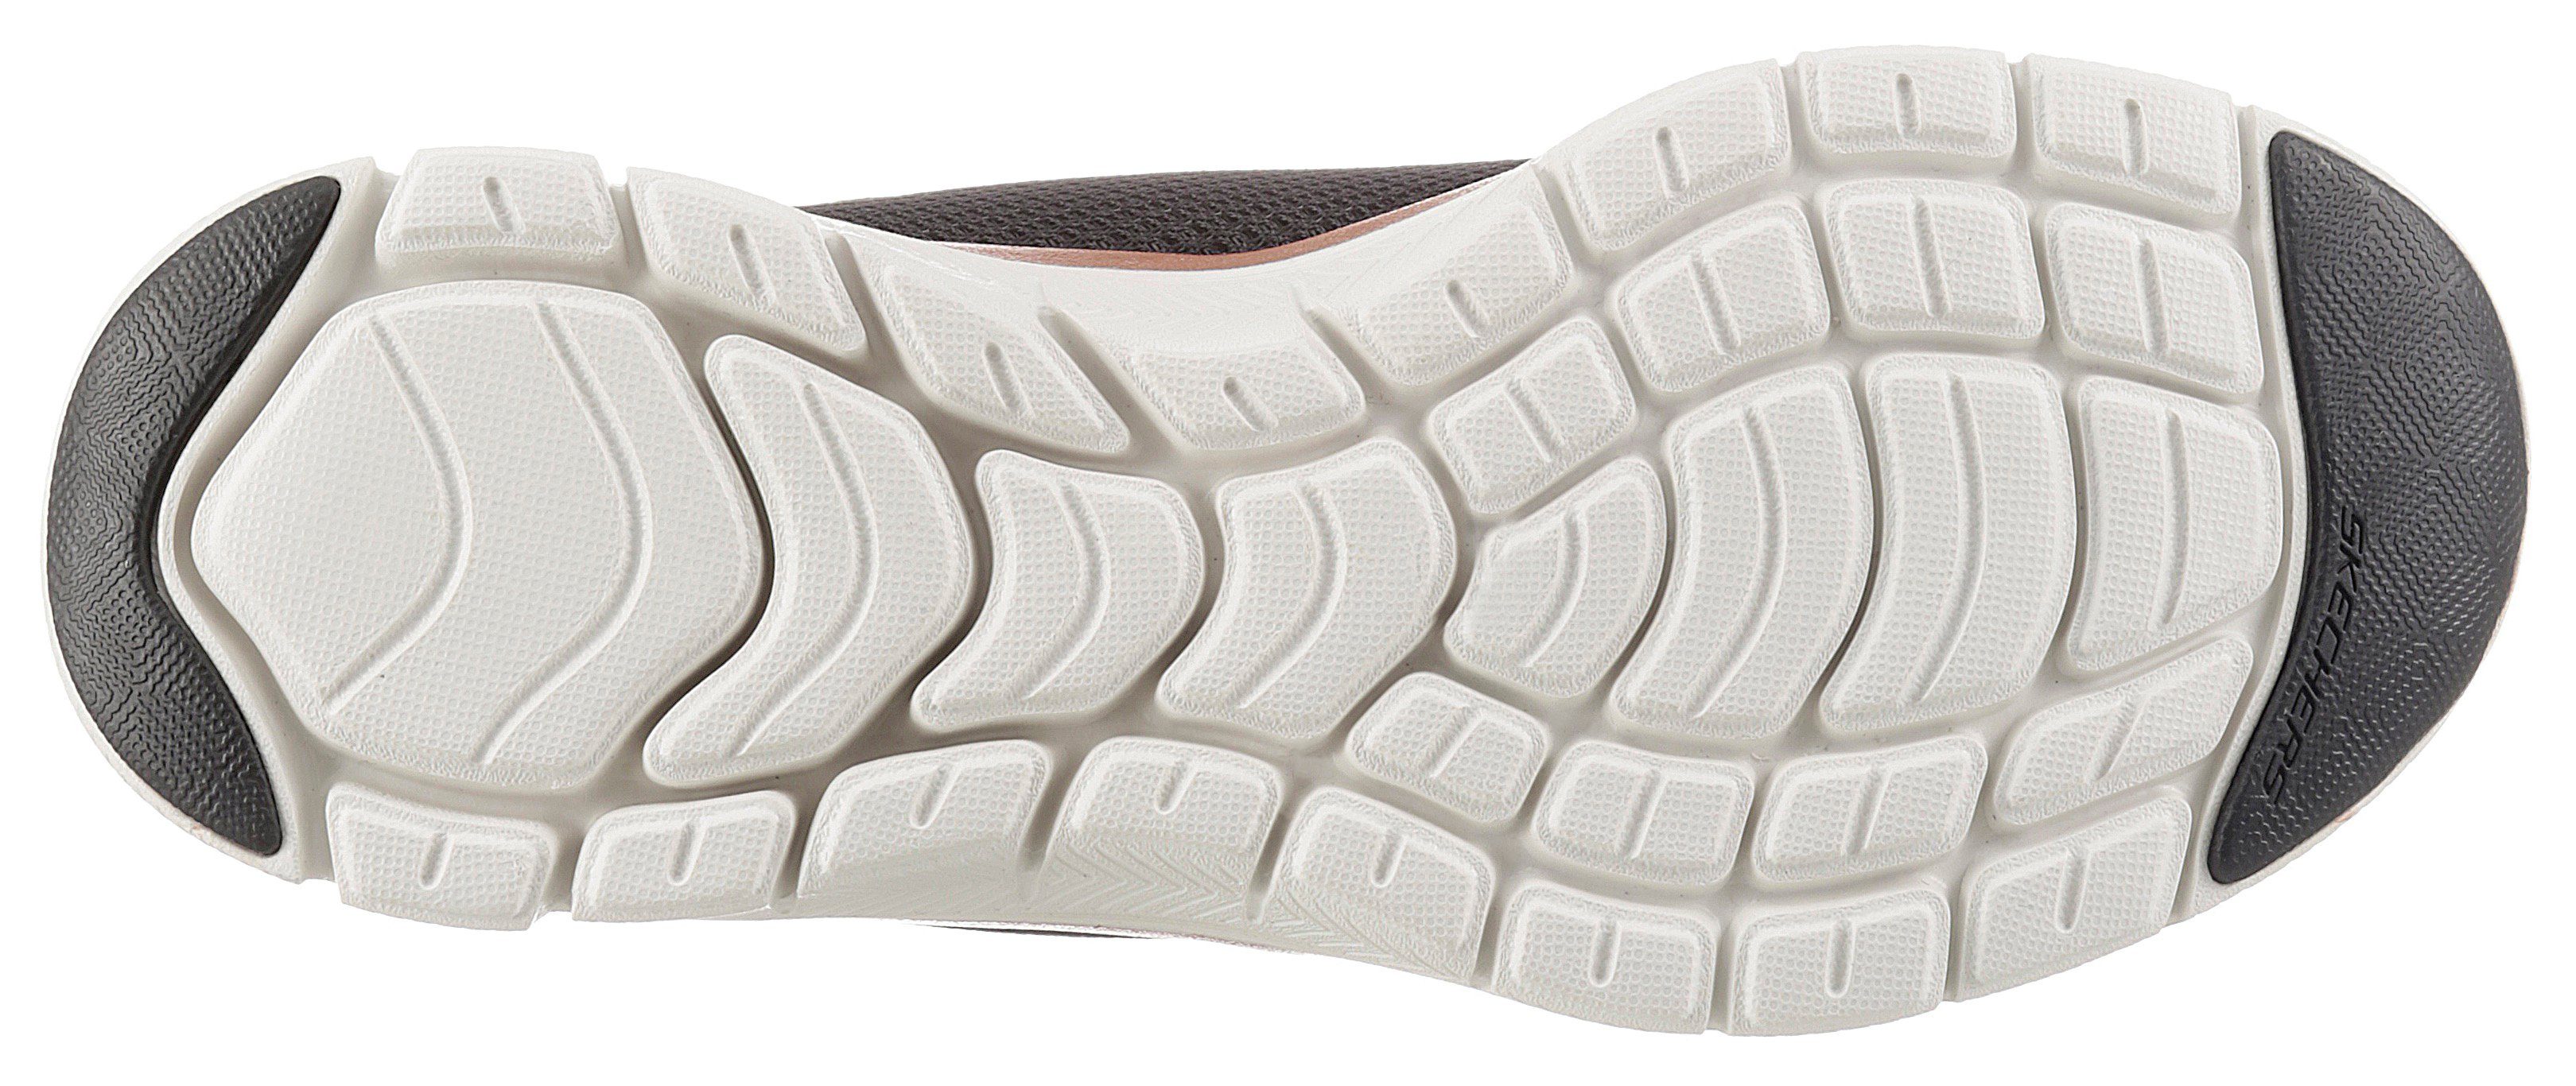 Foam 4.0 Air-Cooled Memory VIEW BRILLINAT Sneaker Skechers FLEX schwarz-rosé Ausstattung APPEAL mit